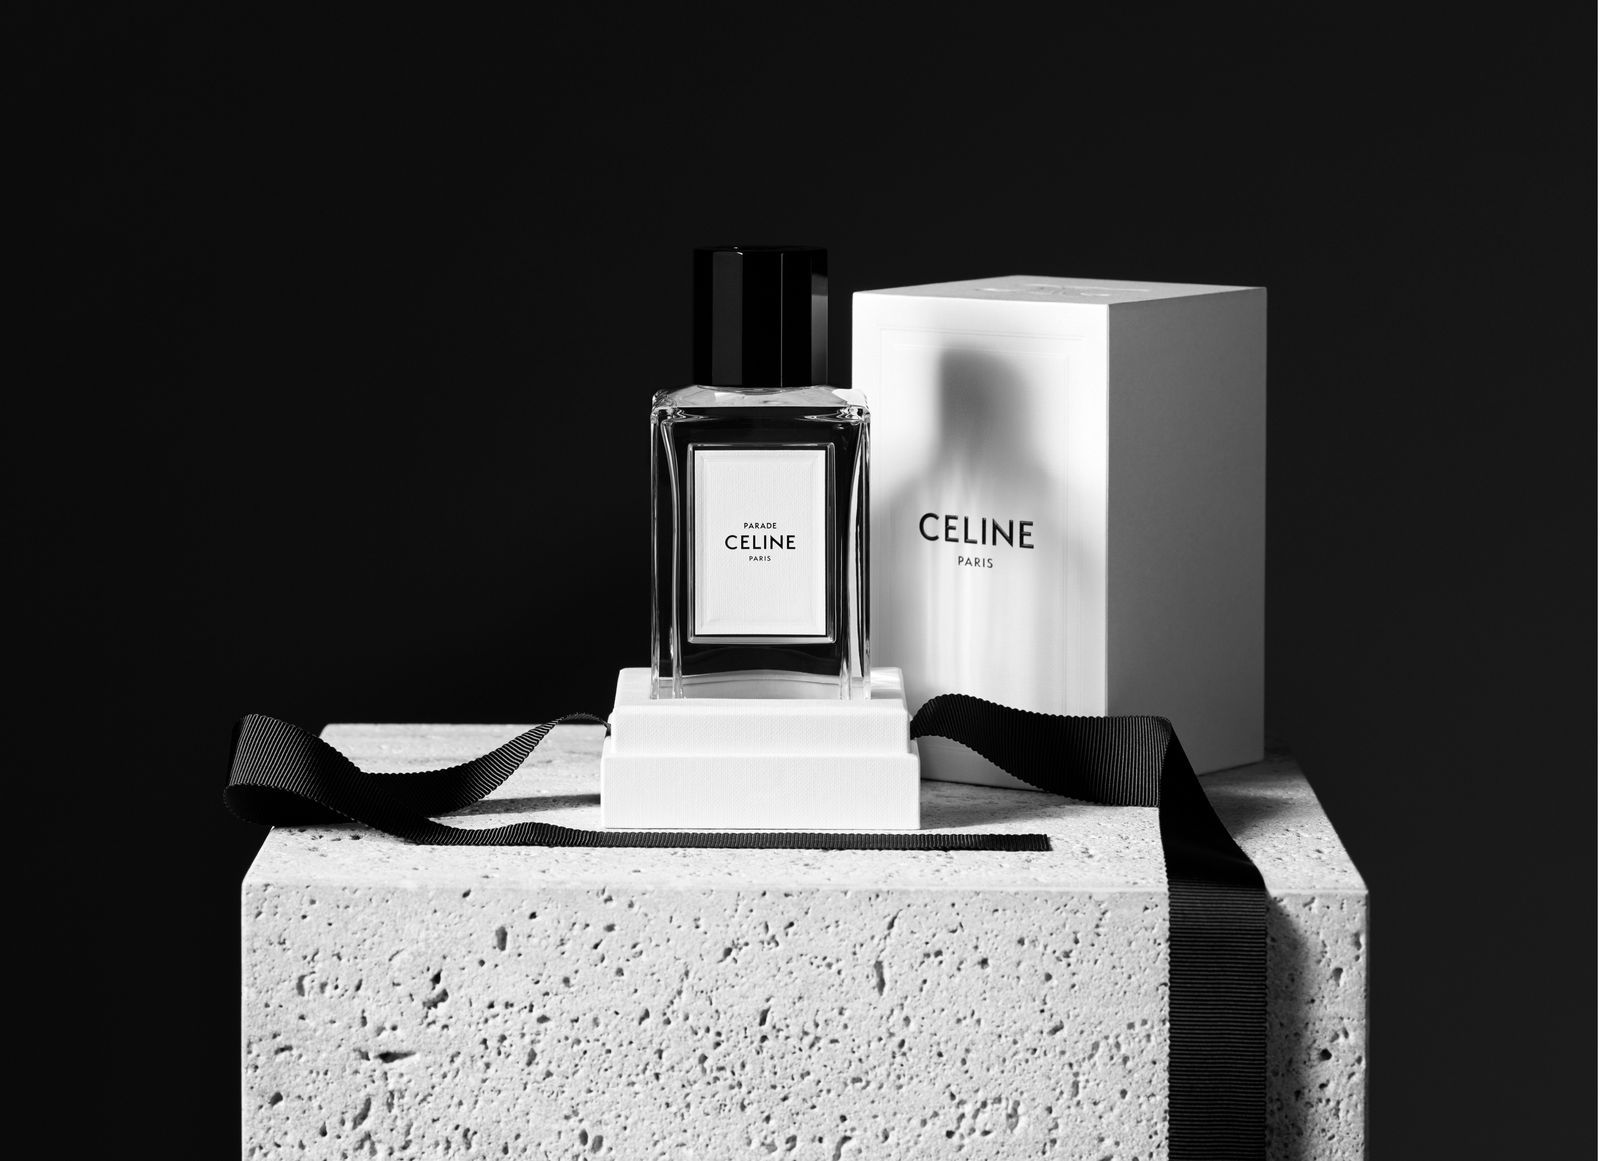 Hedi Slimane’s Celine debuts a new line of scents